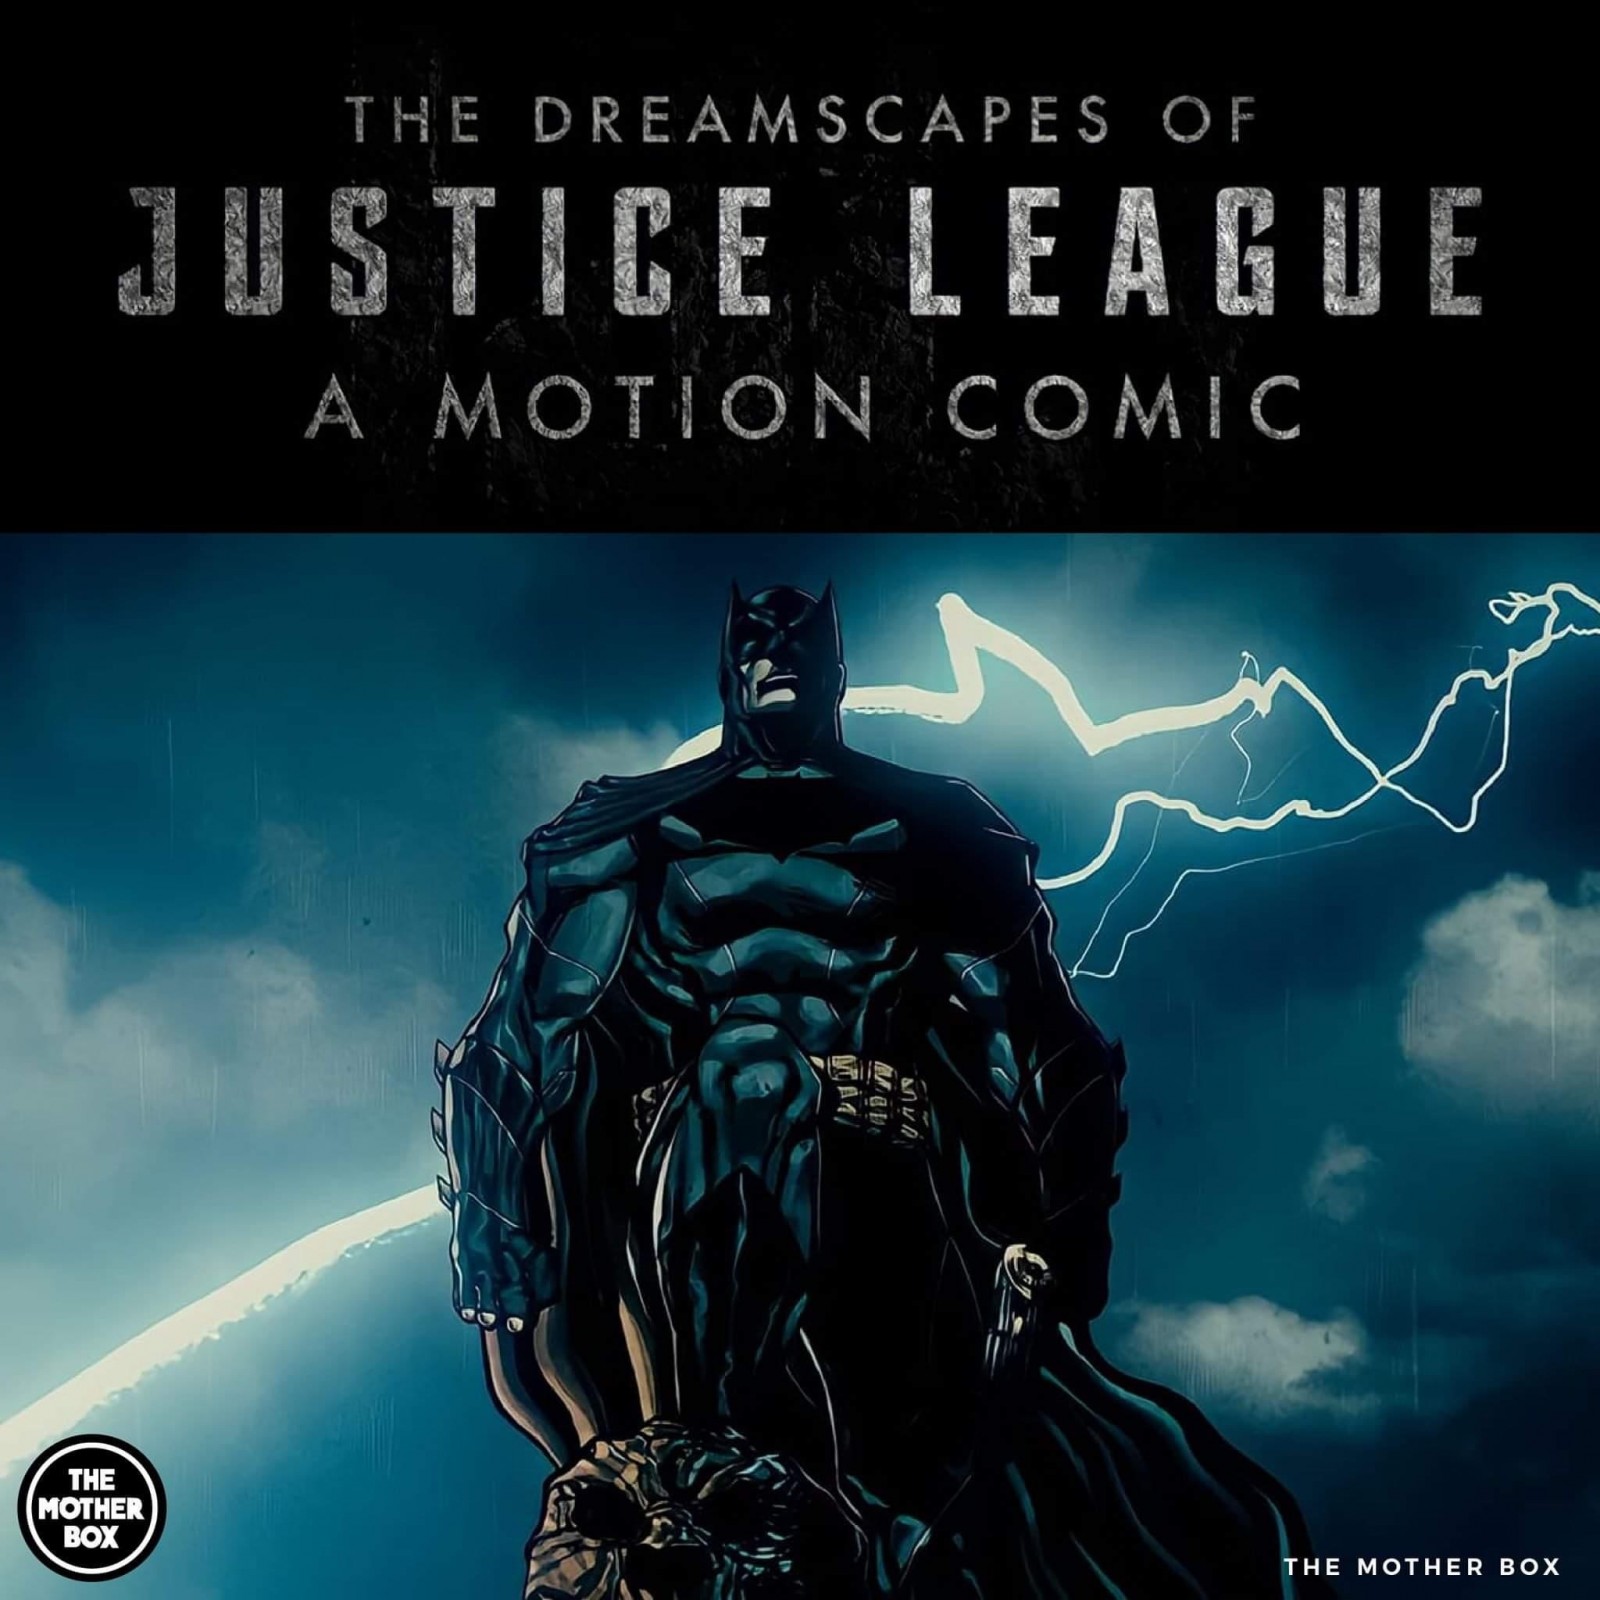 Batman, Snyderverse, The Dreamscapes of Justice League: A Motion Comic, Zack Snyder